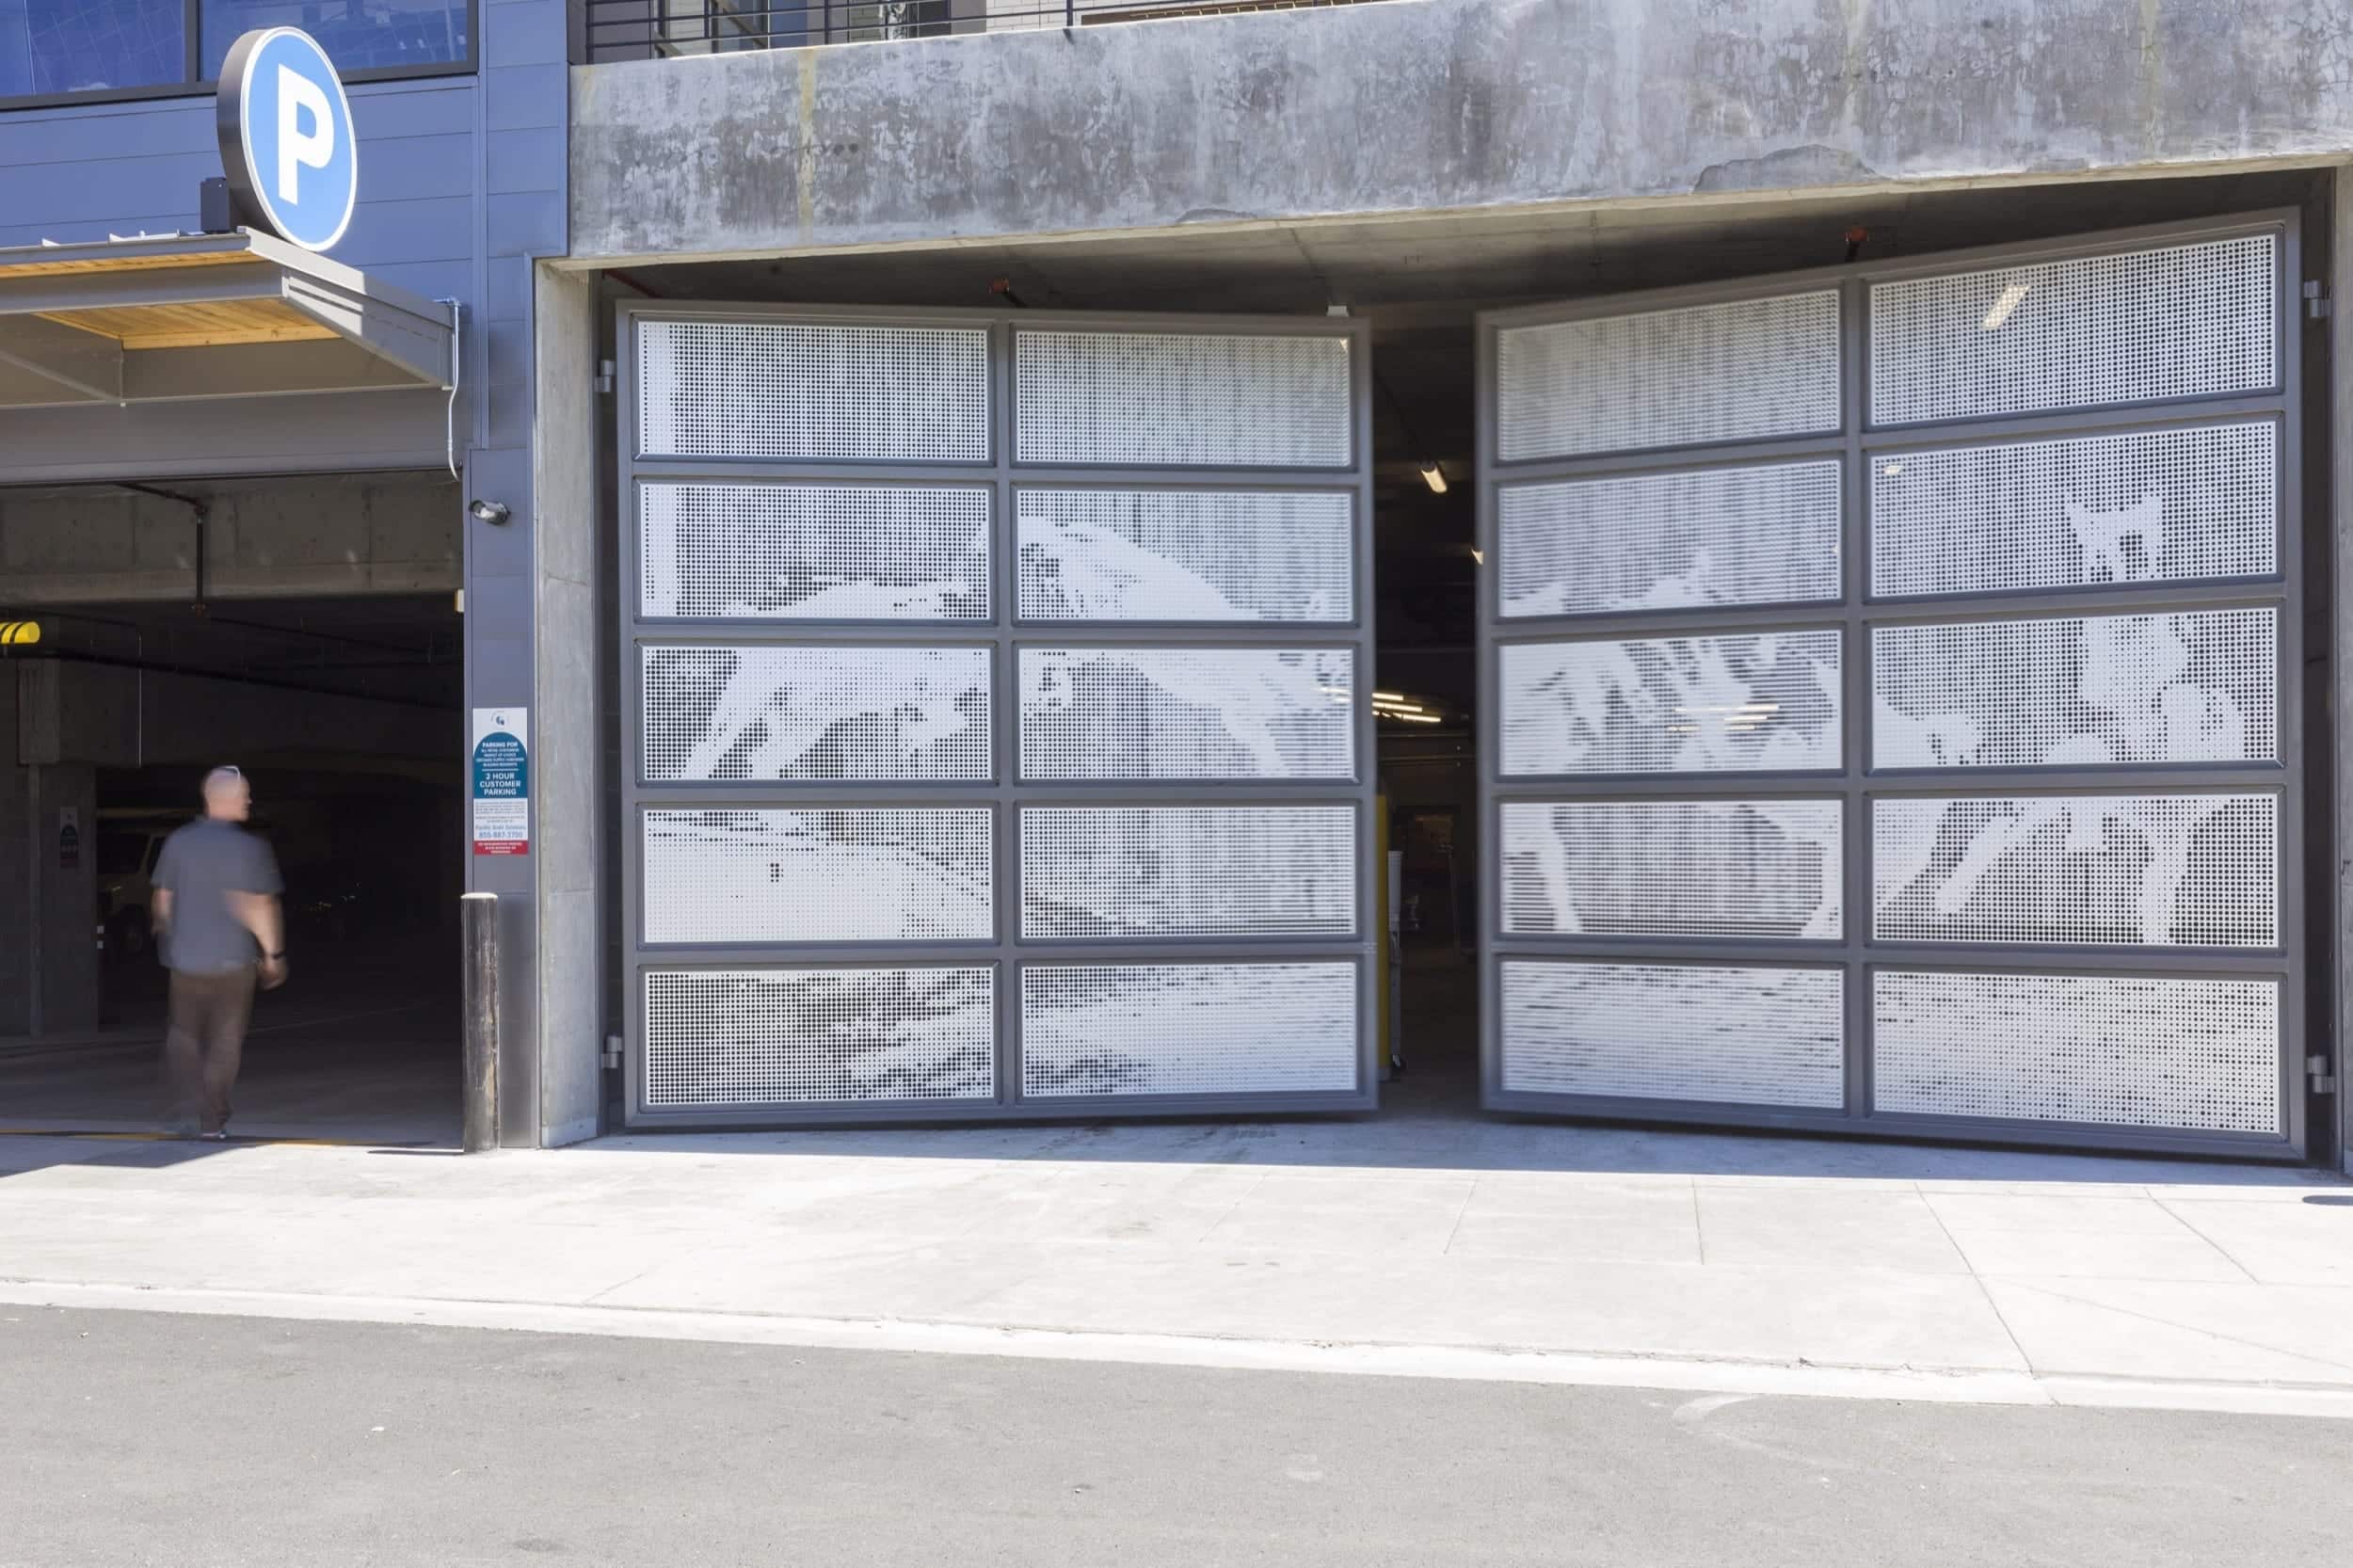 Exterior view of ImageWall applied to hinged garage door.